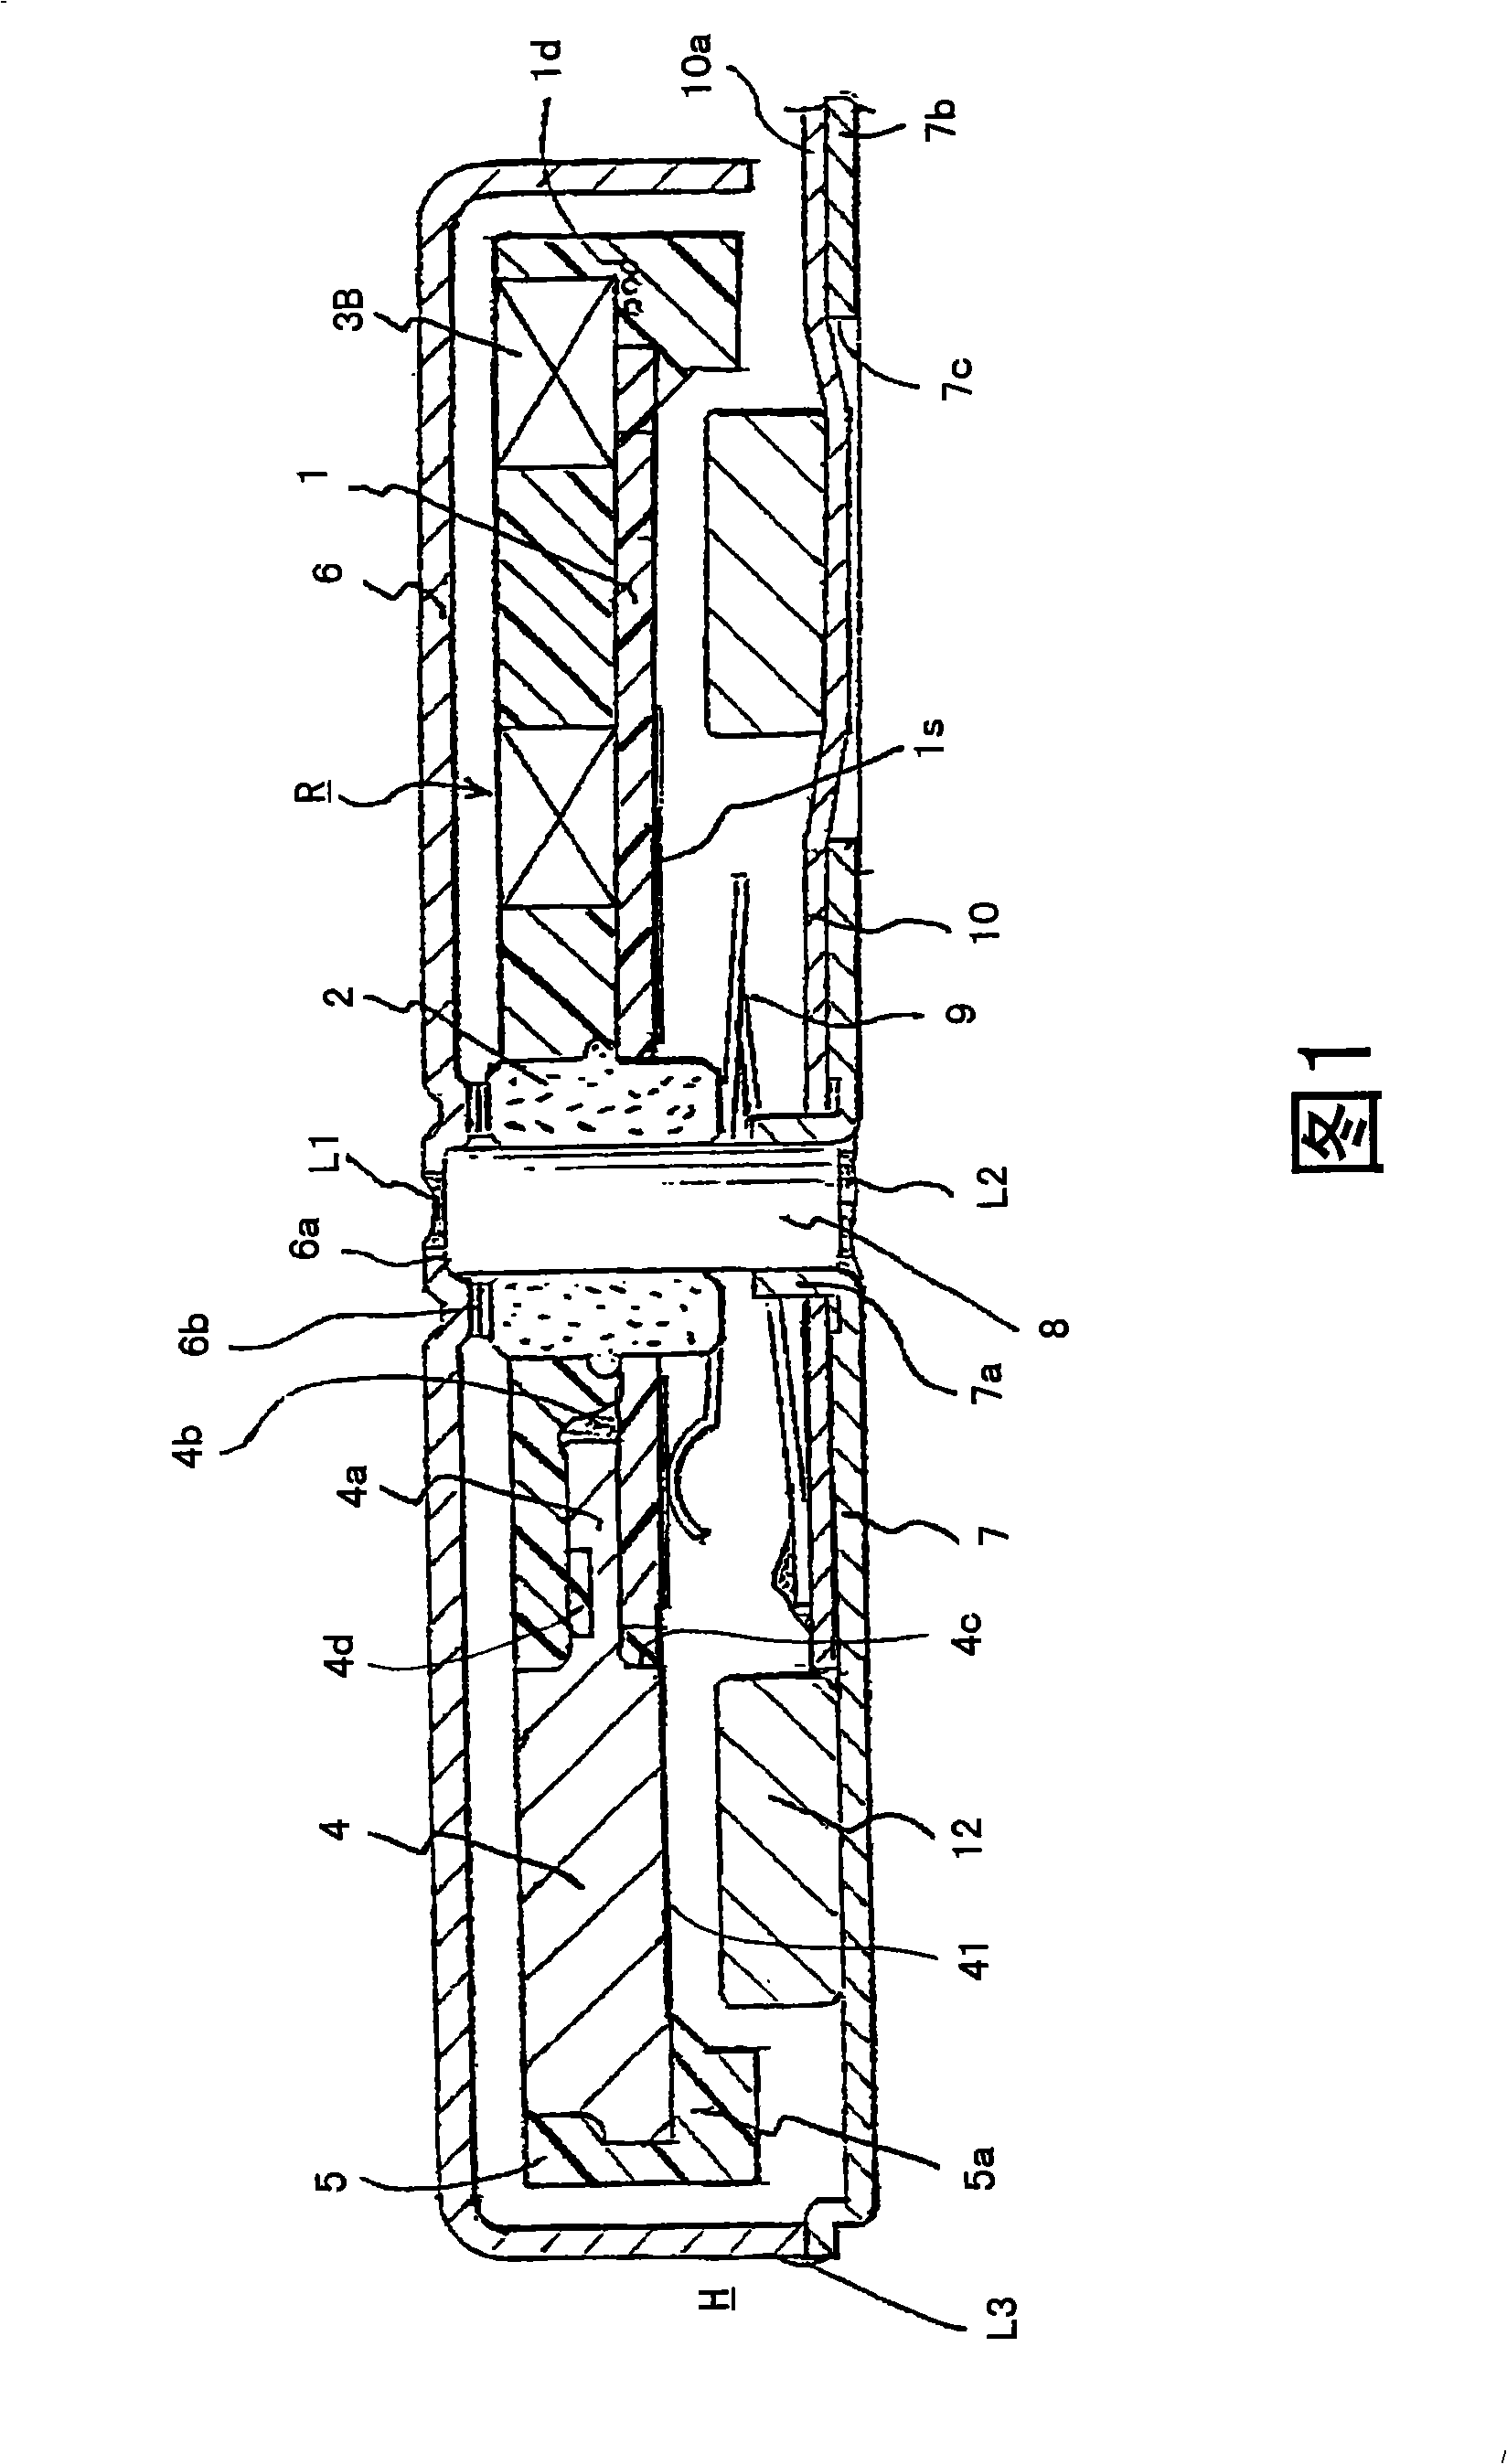 Axial gap type eccentric rotor and axial gap type coreless vibrating motor using said rotor